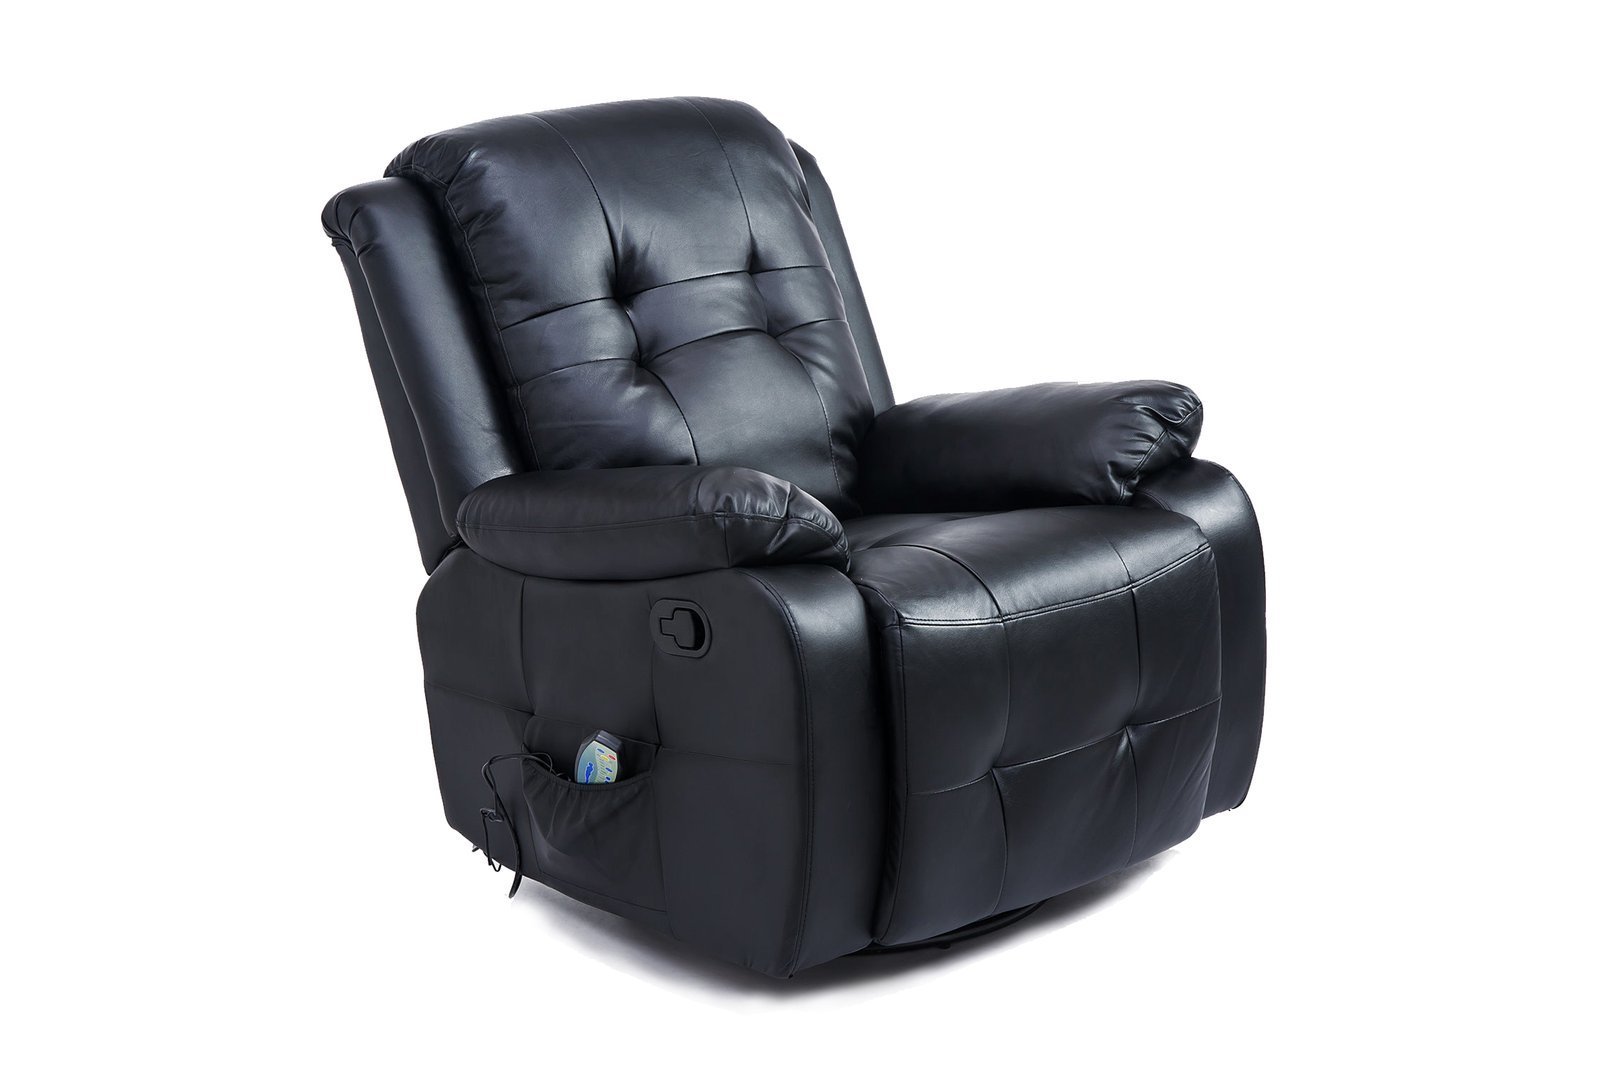 Massage chair with heating function Homcom 700-053BK Black